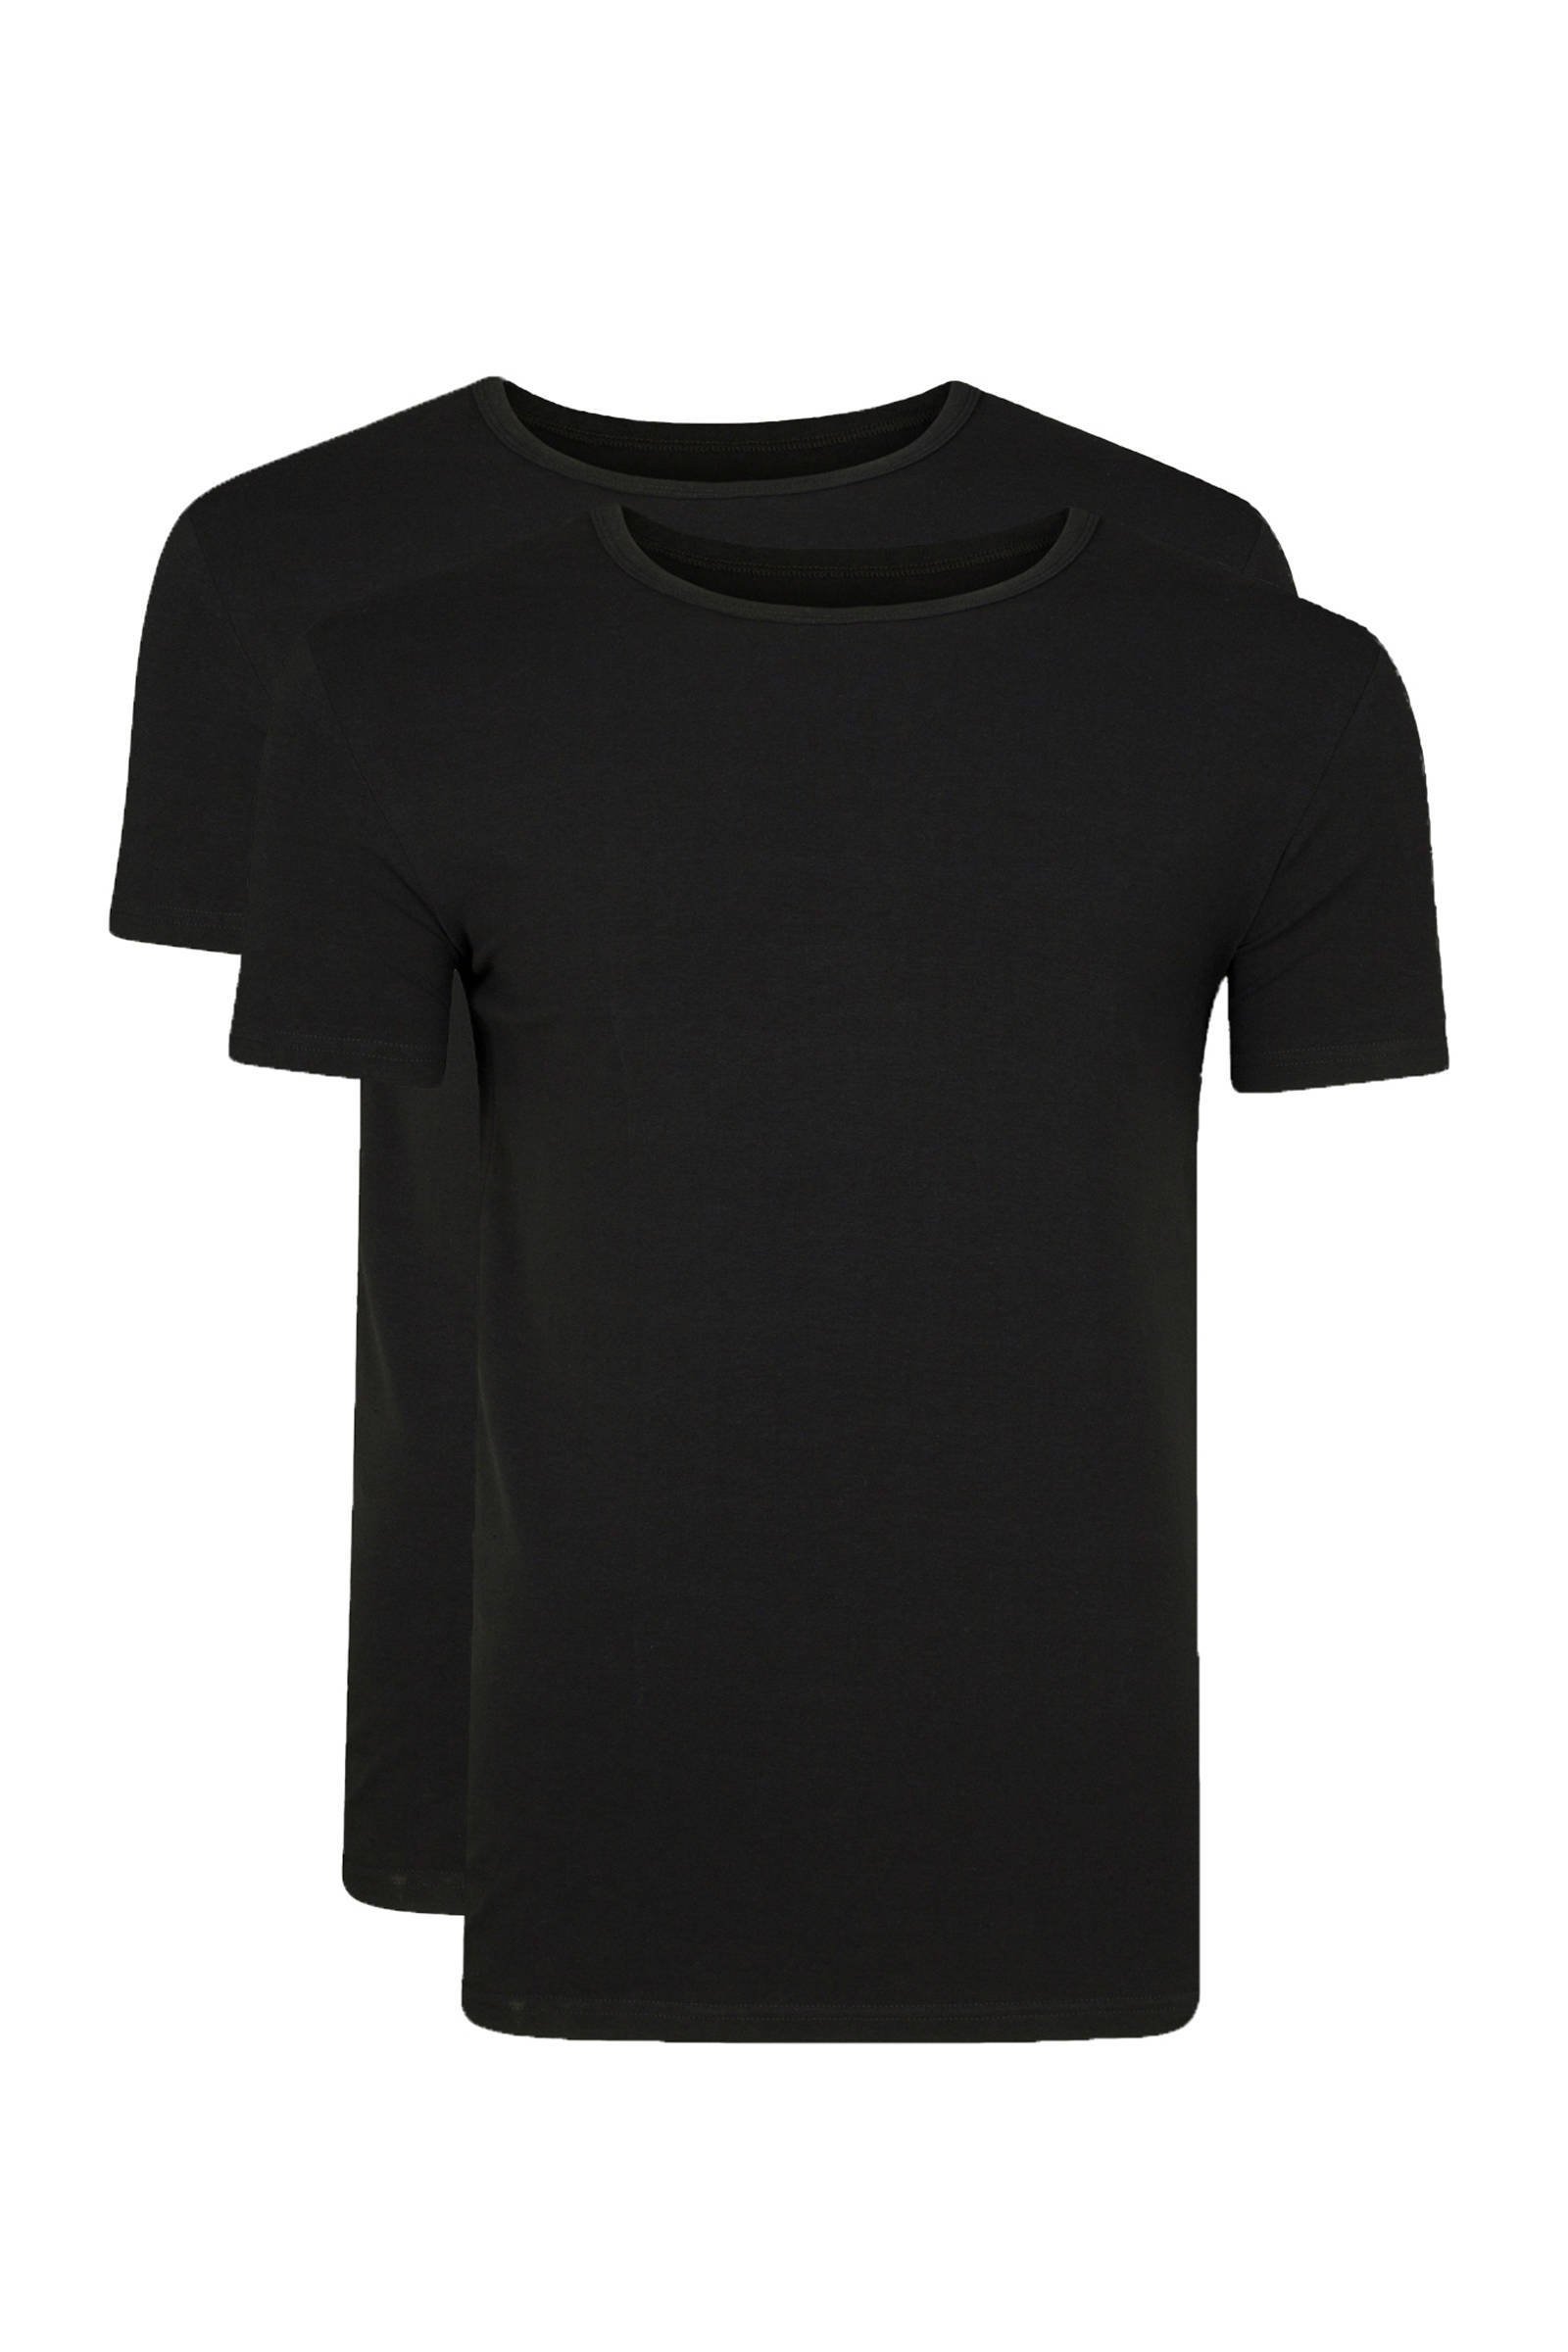 WE Fashion T shirt zwart(set van 2 ) online kopen